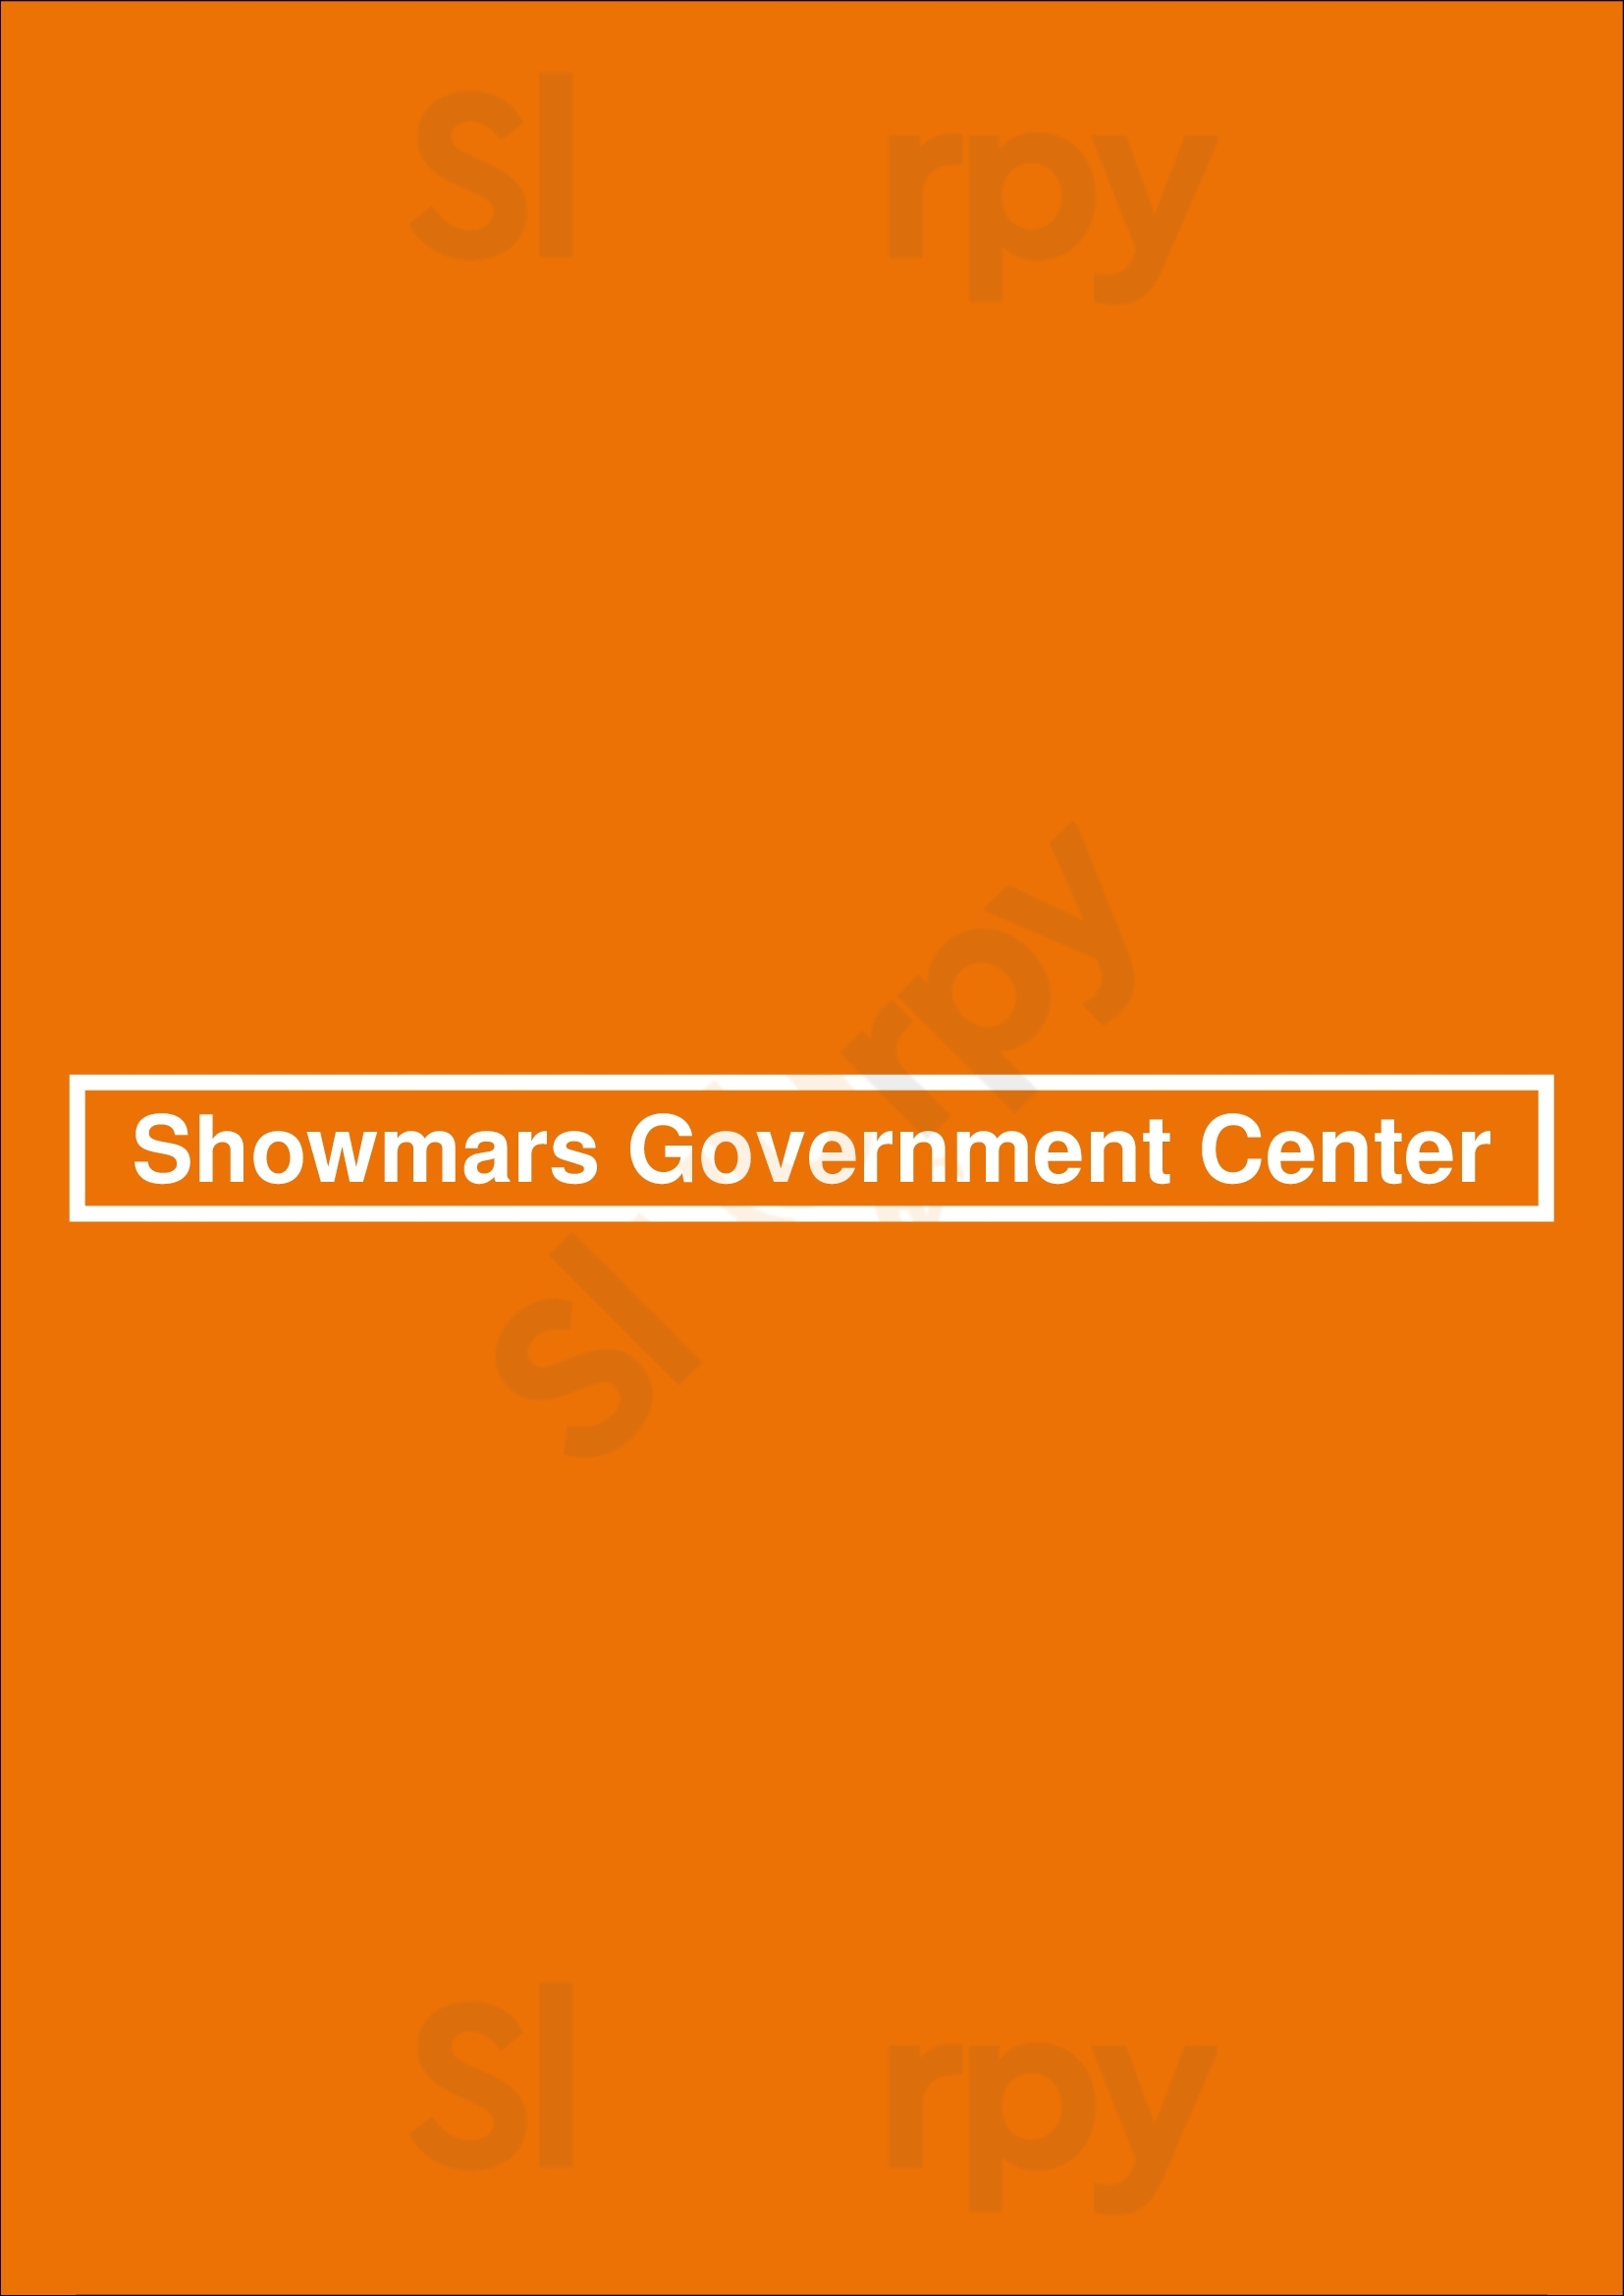 Showmars Government Building Charlotte Menu - 1